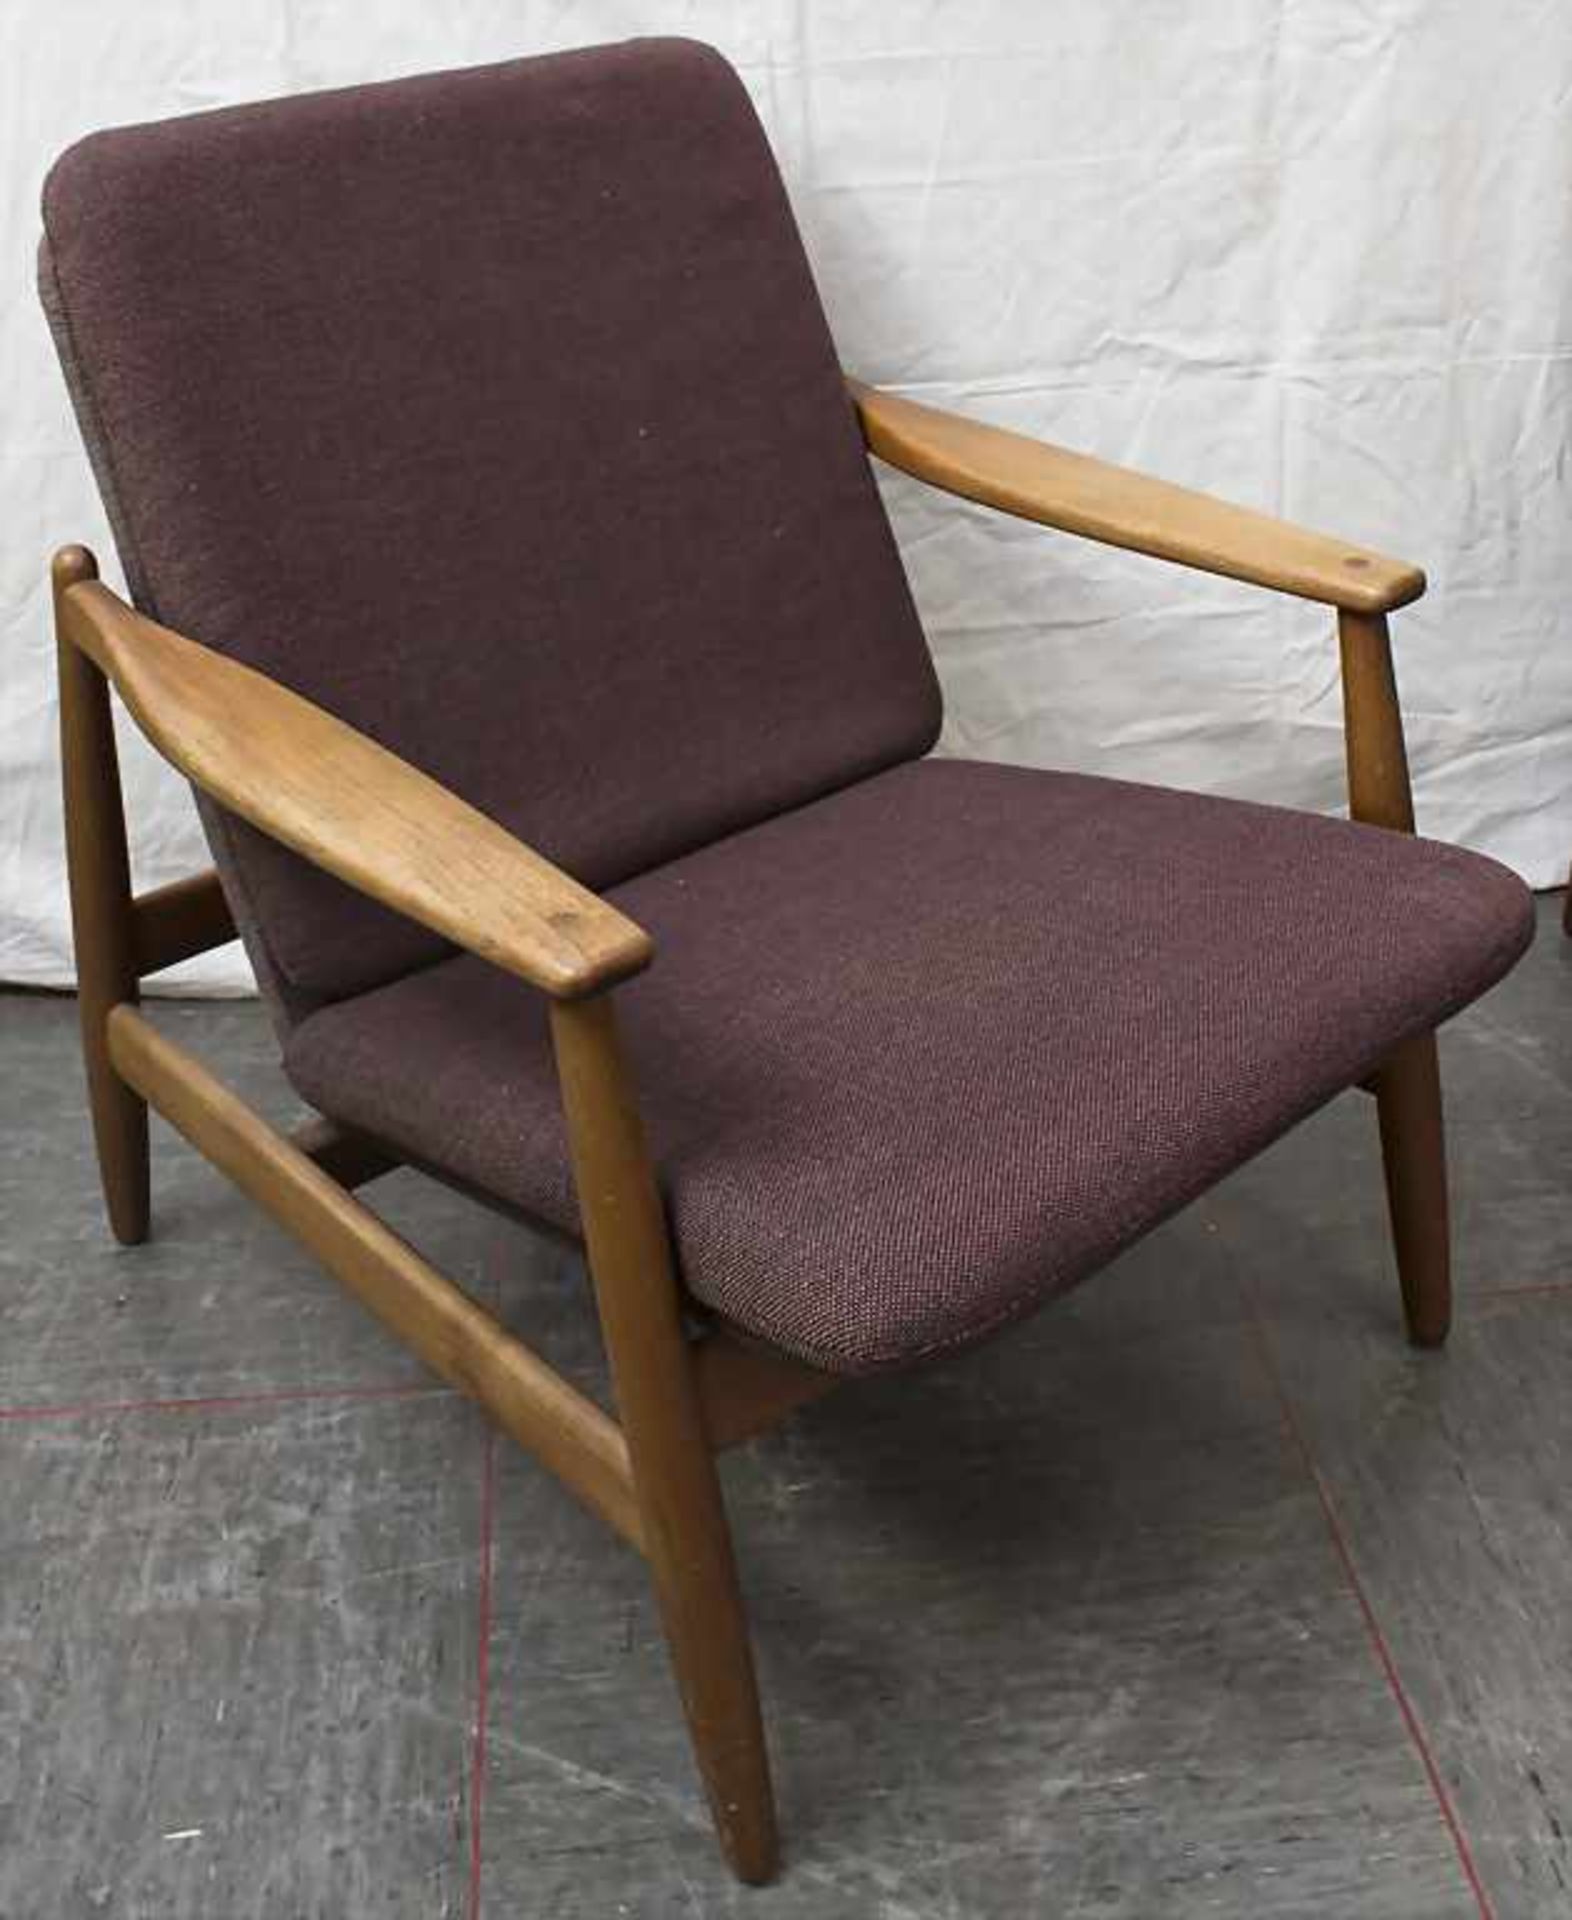 Sessel / An armchair, Hans Olsen, 1960er JahreMaterial: Teakholz, Polster mit braunem Stoffbezug,